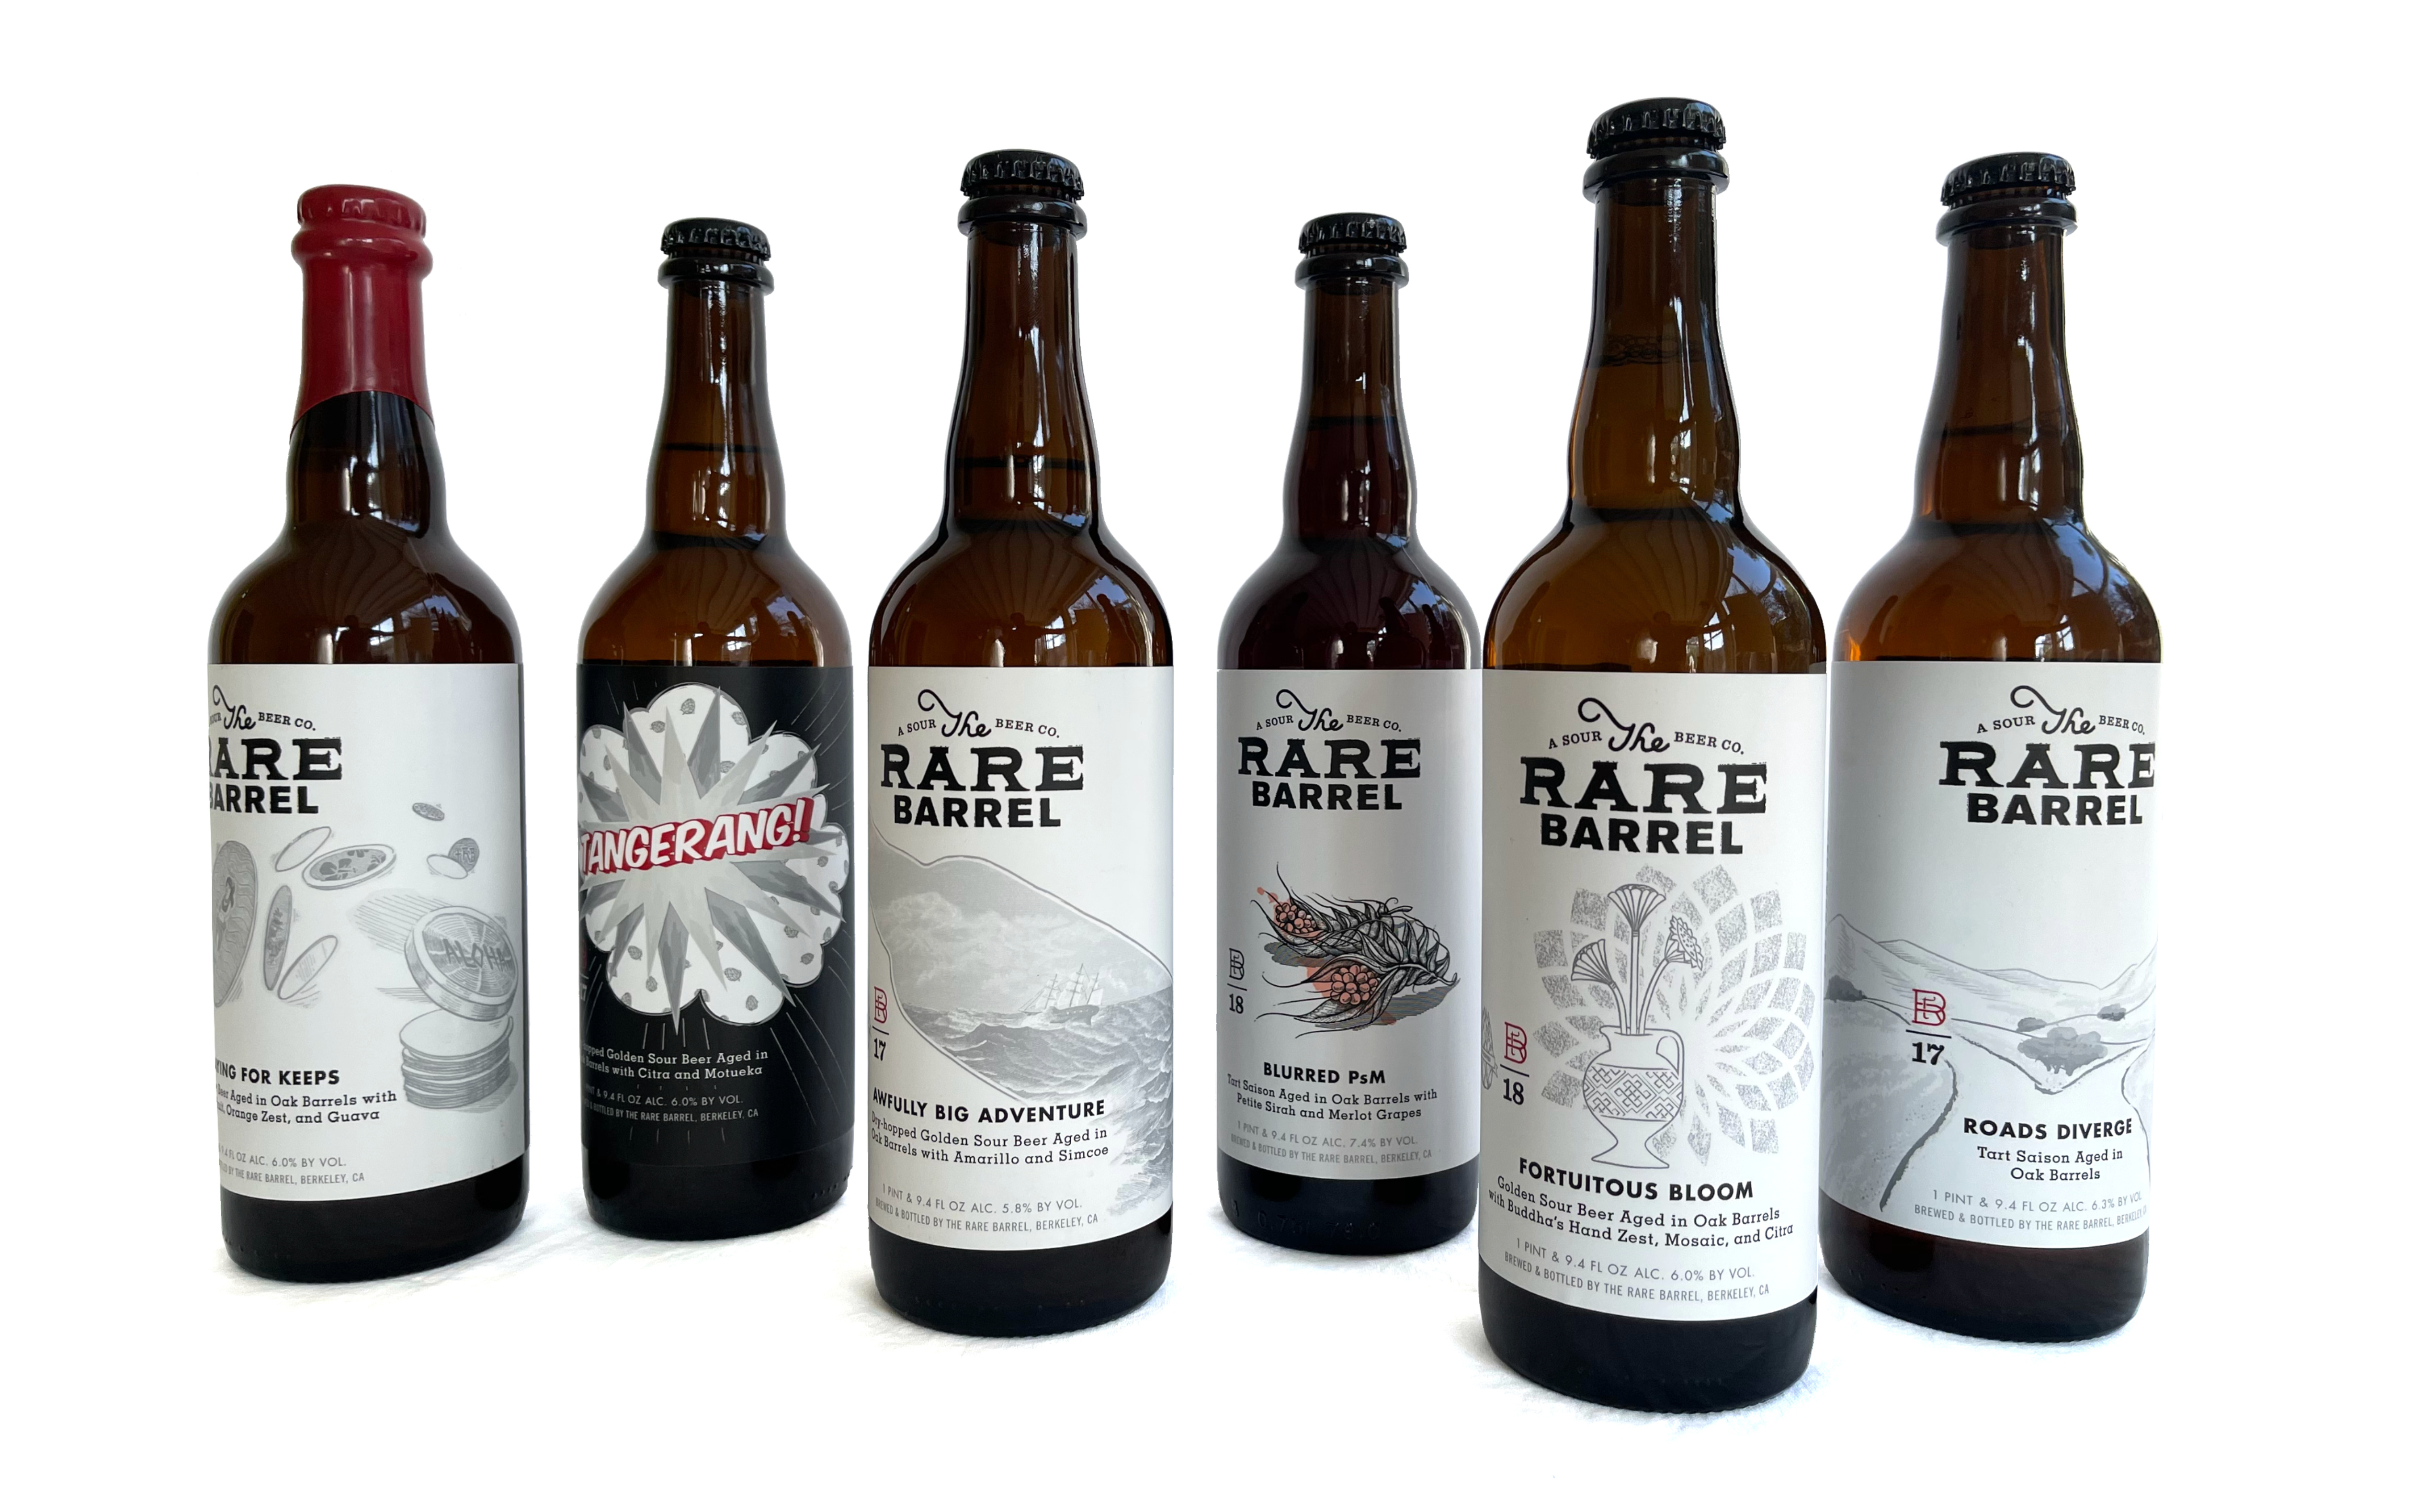 Rare Barrel illustrated bottles